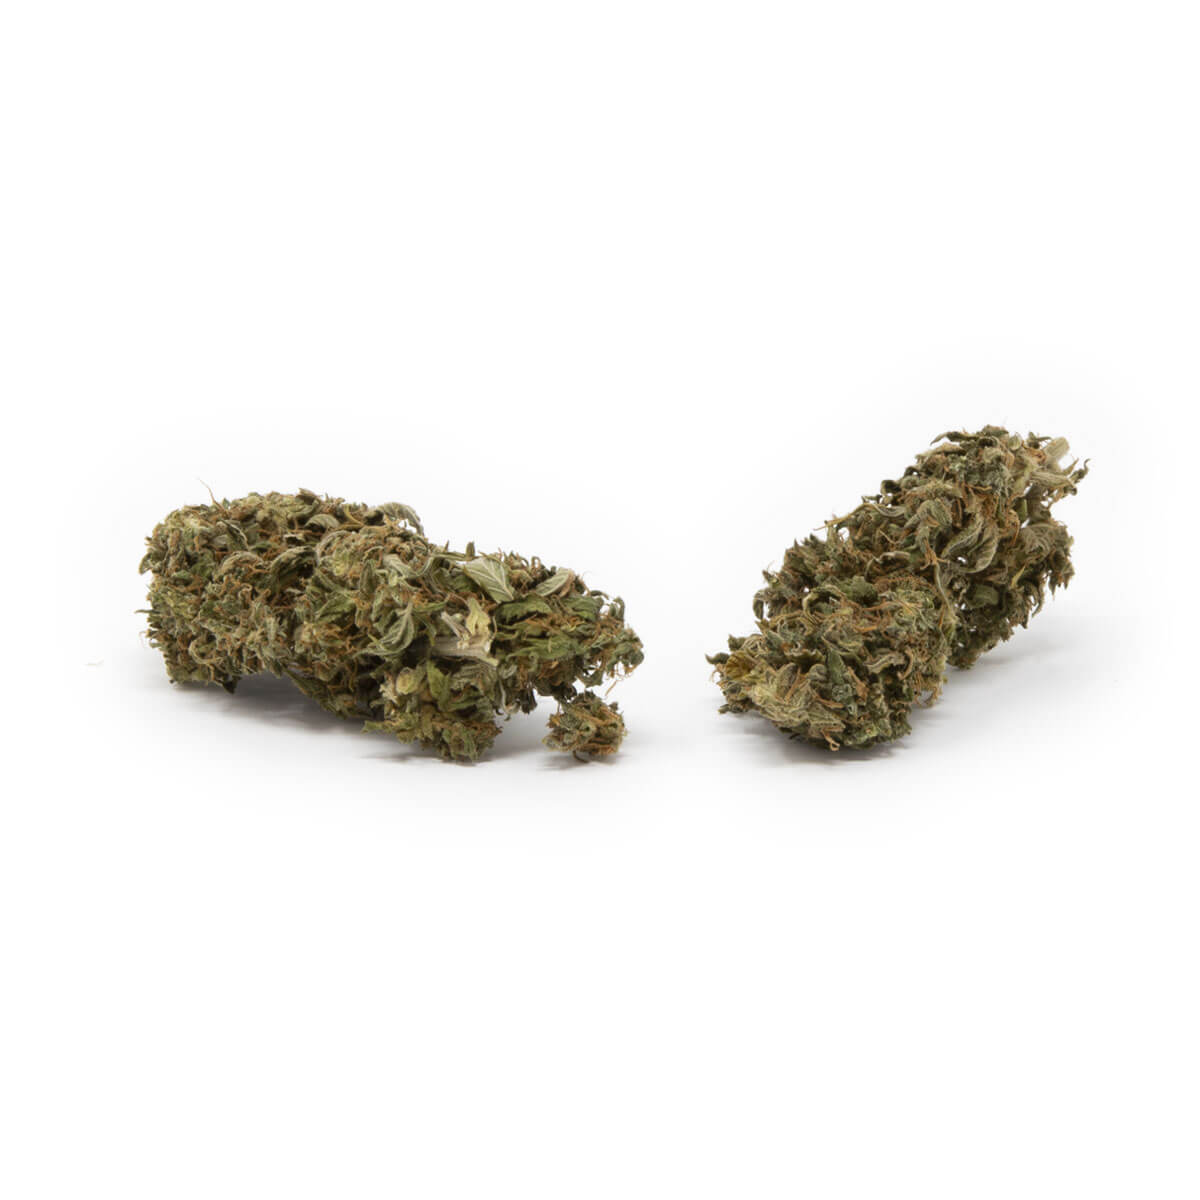 Solomatic CBT Marijuana UK - Buy Indica Weed Strain Online Salisbury